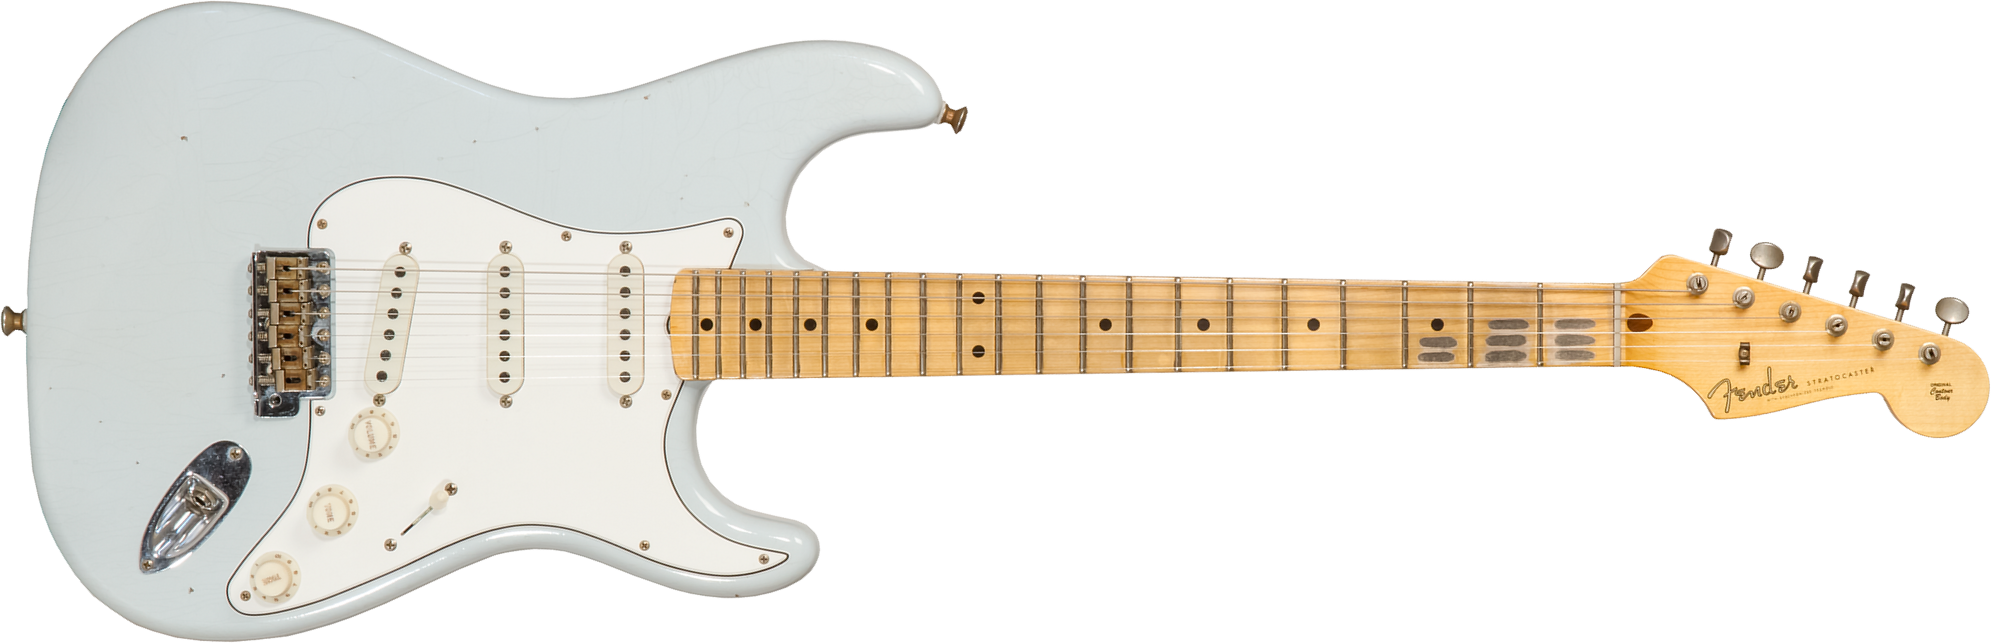 Fender Custom Shop Strat Tomatillo Special 3s Trem Mn #cz571194 - Journeyman Relic Aged Sonic Blue - Guitarra eléctrica con forma de str. - Main pictu